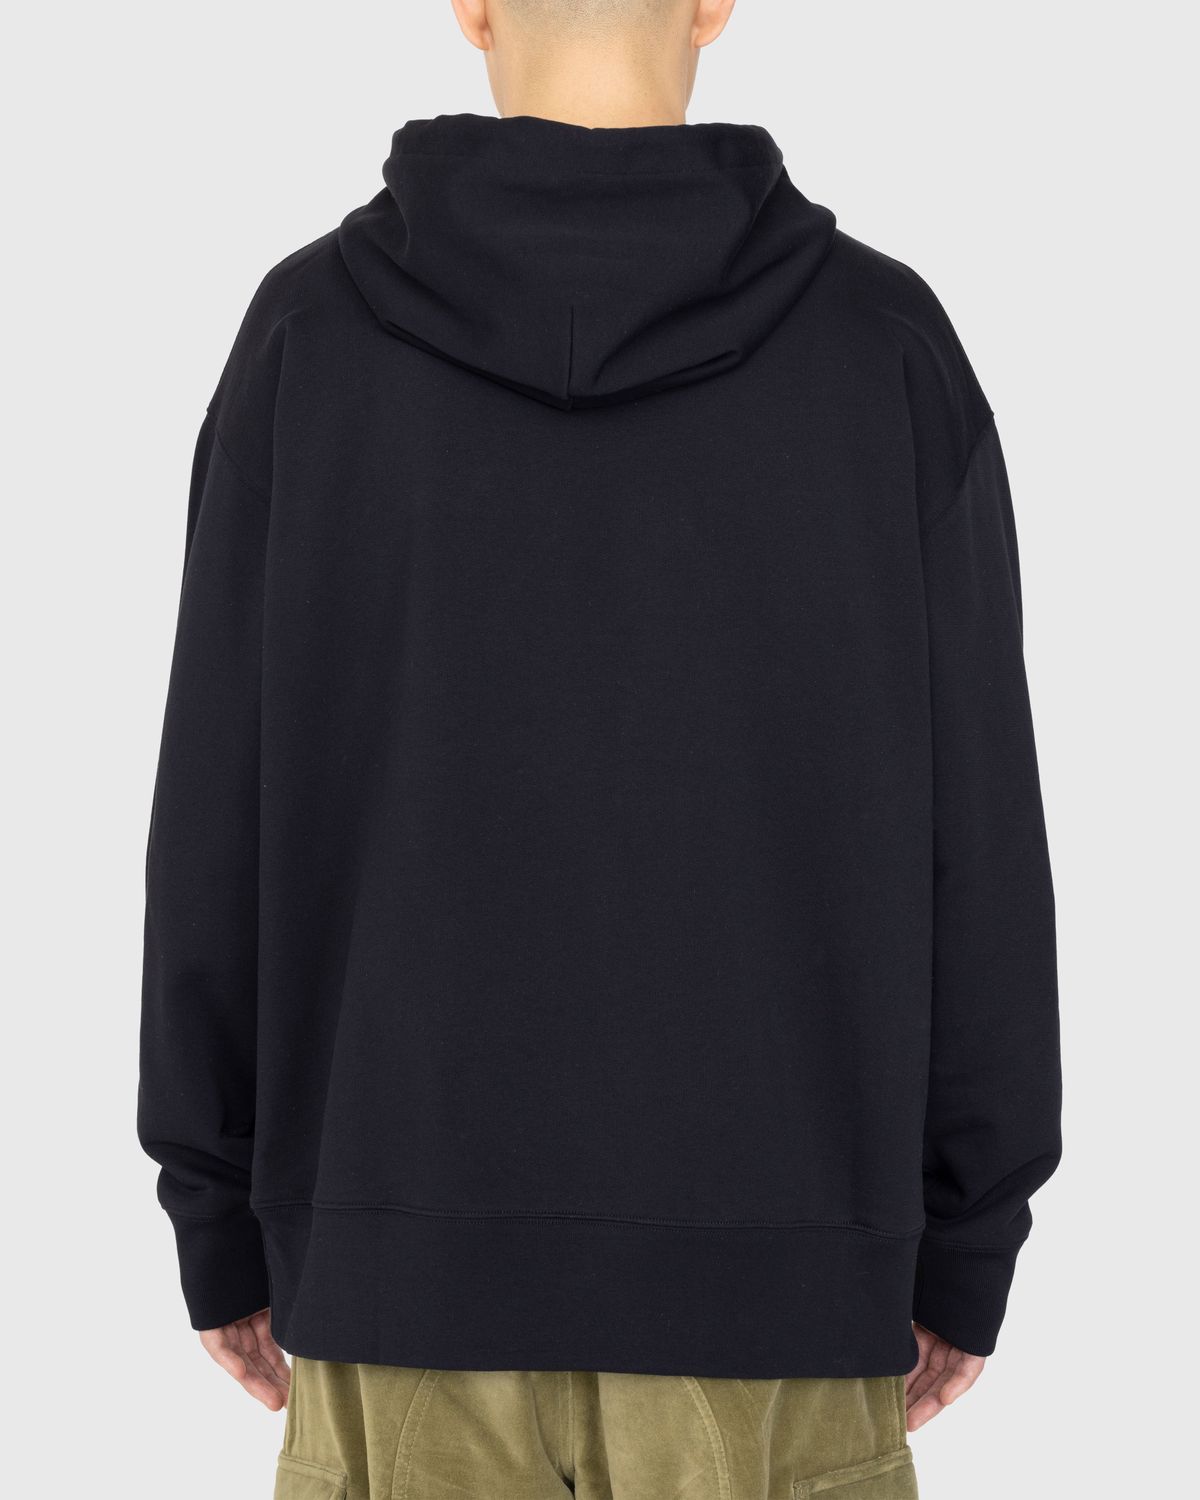 Acne Studios – Organic Cotton Hooded Sweatshirt Black - Sweats - Black - Image 4